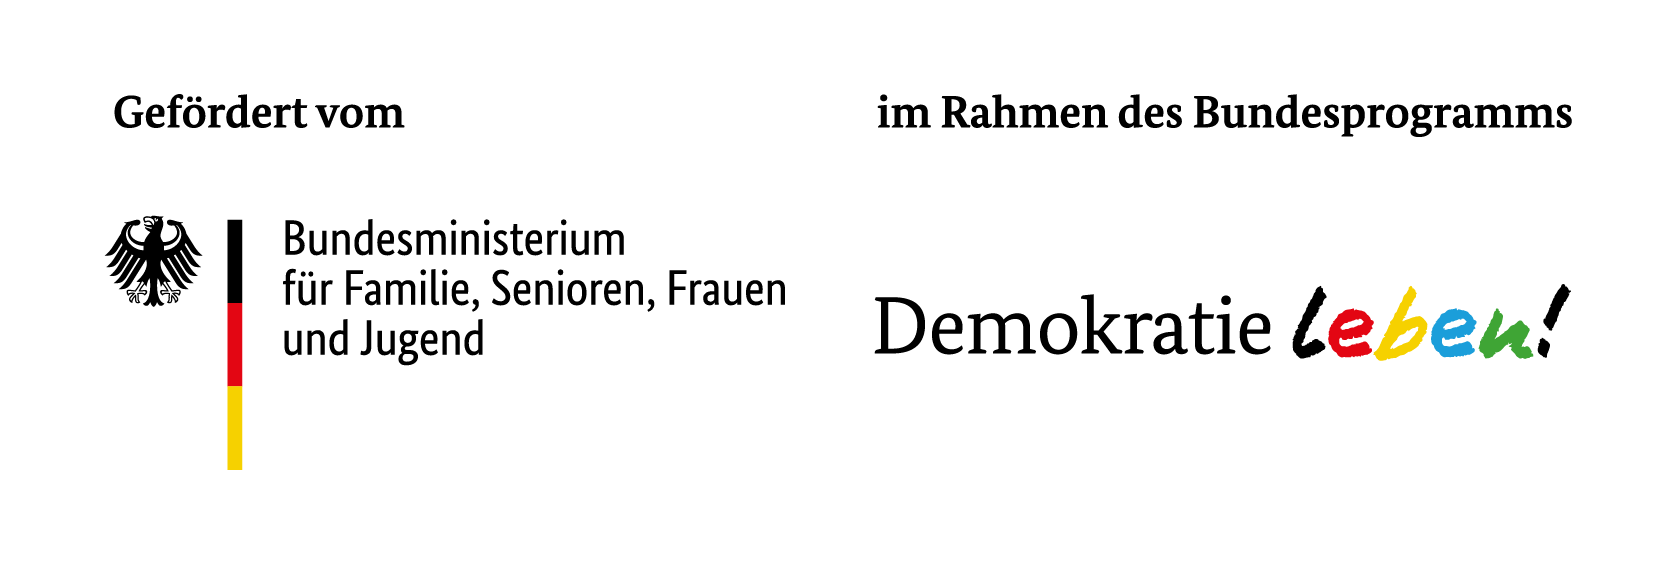 Logo des Bundesministeriums für Familie, Senioren, Frauen und Jugend © Bundesministerium für Familie, Senioren, Frauen und Jugend